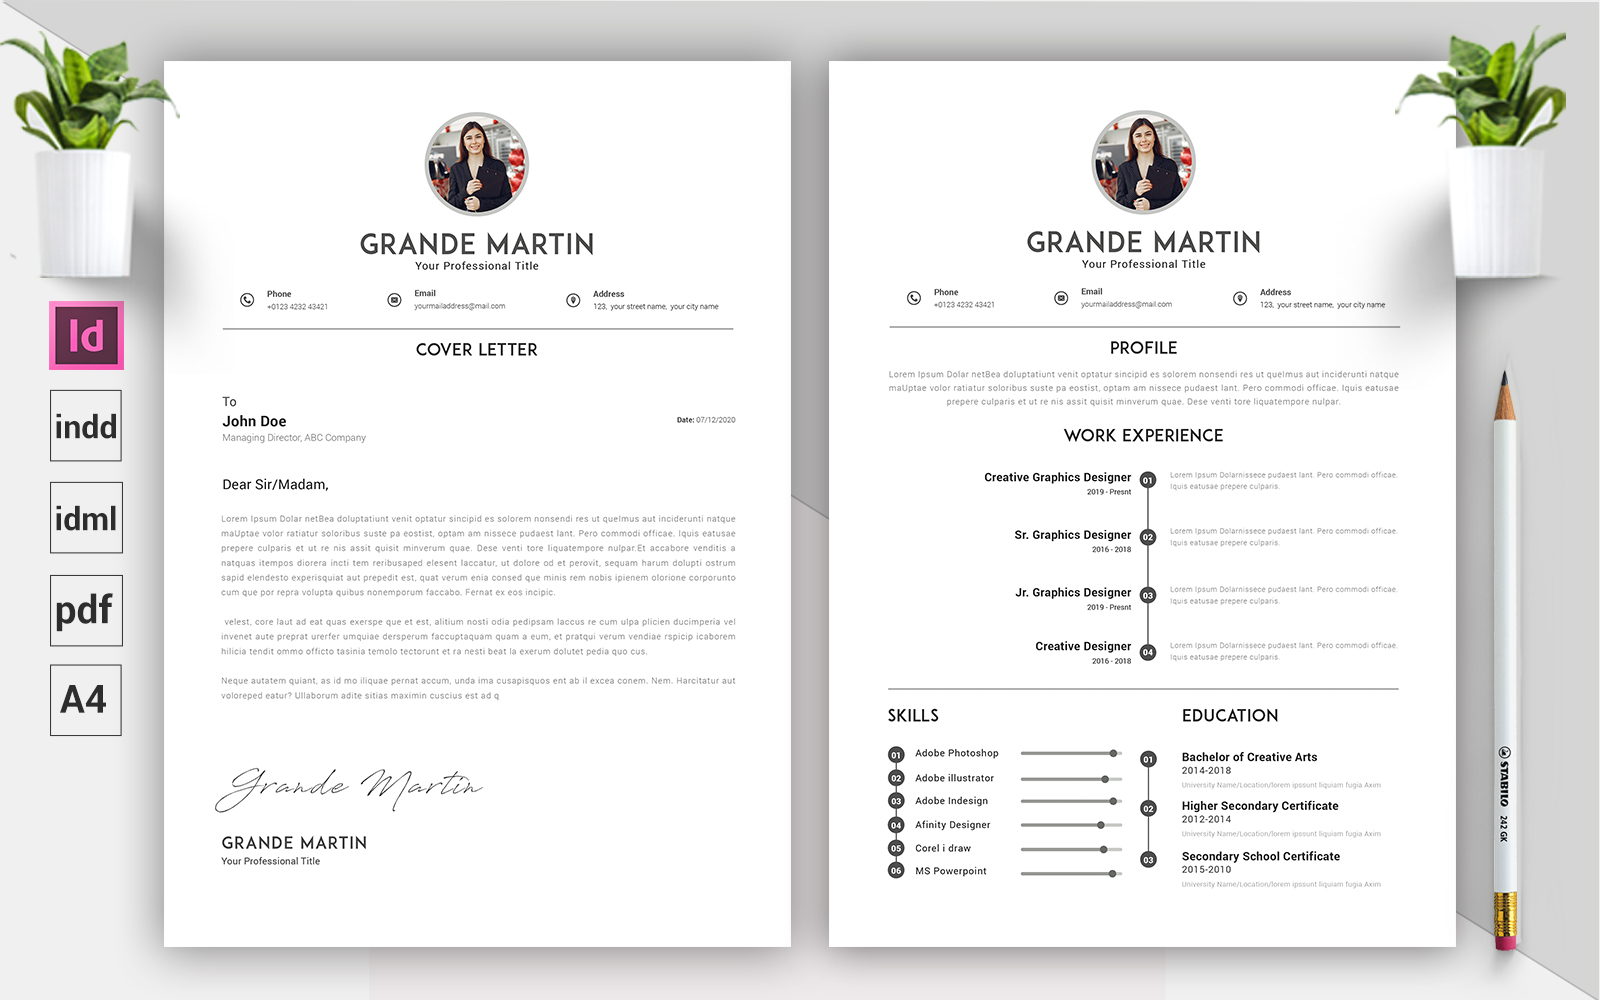 Grande Martin - CV & Resume Template